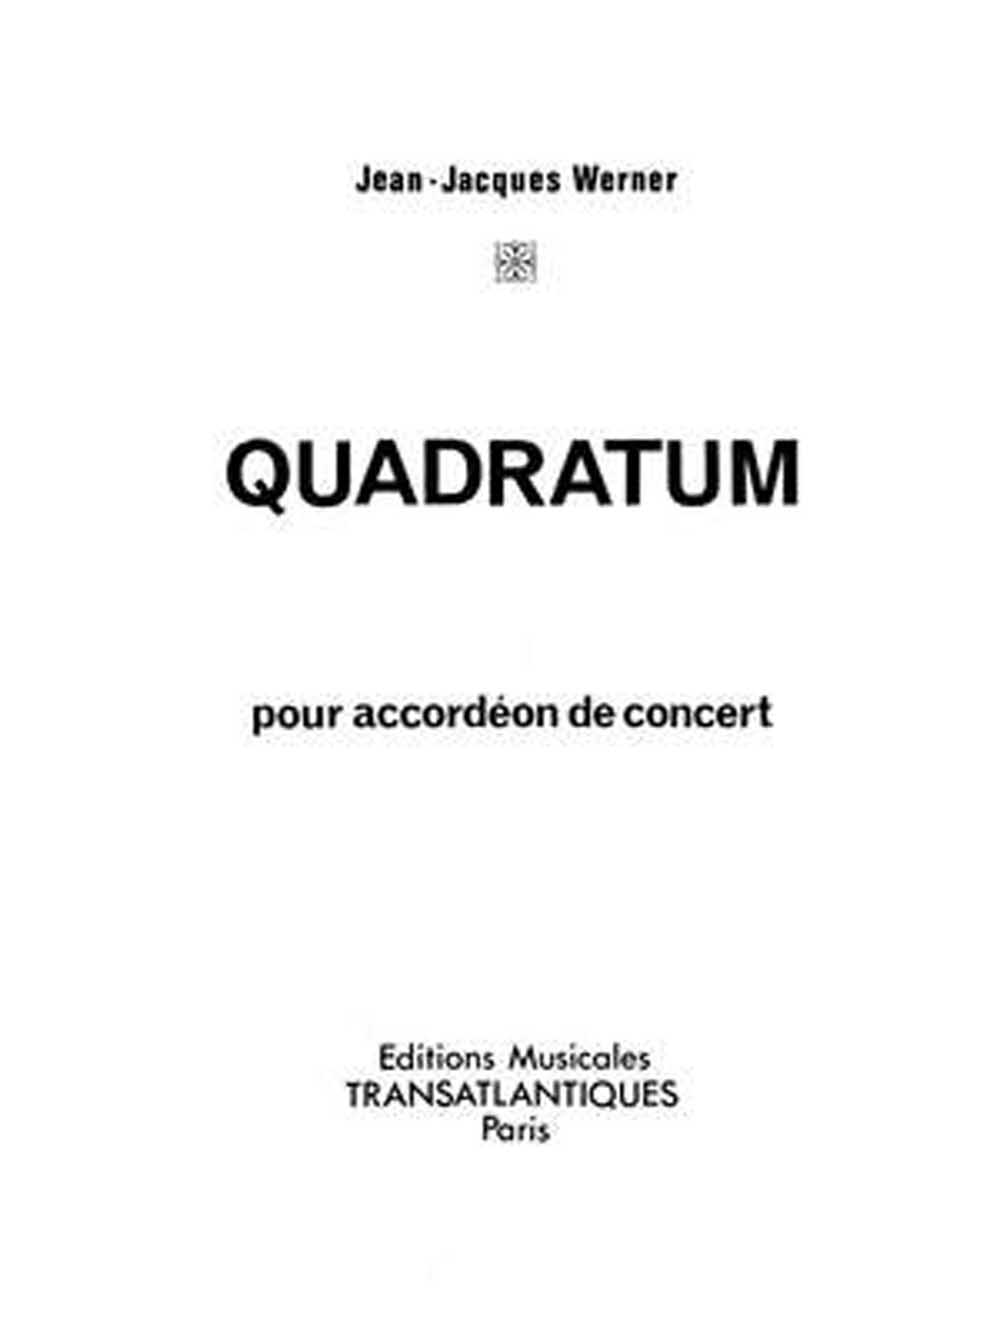 Jean Jacques Werner: Quadratum